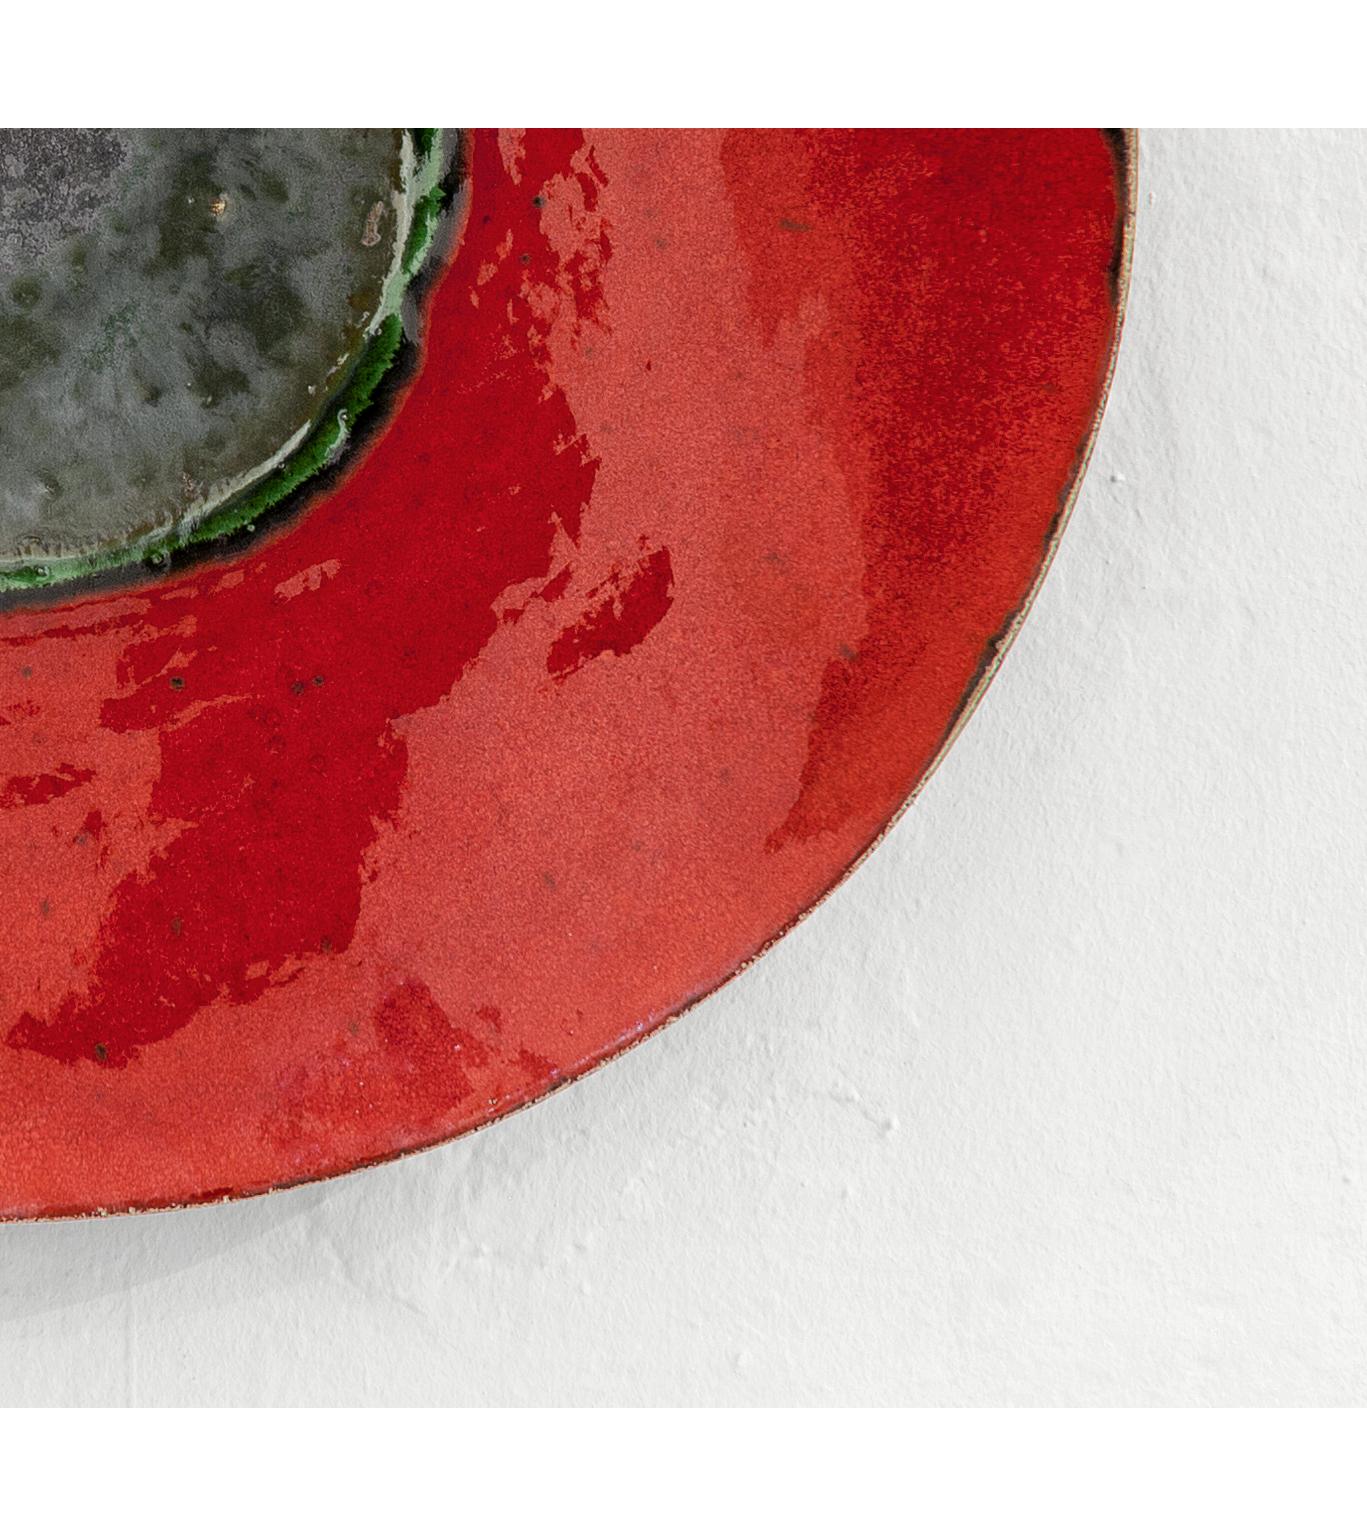 Glazed Red Contemporary Ceramic Decorative Plate For Sale